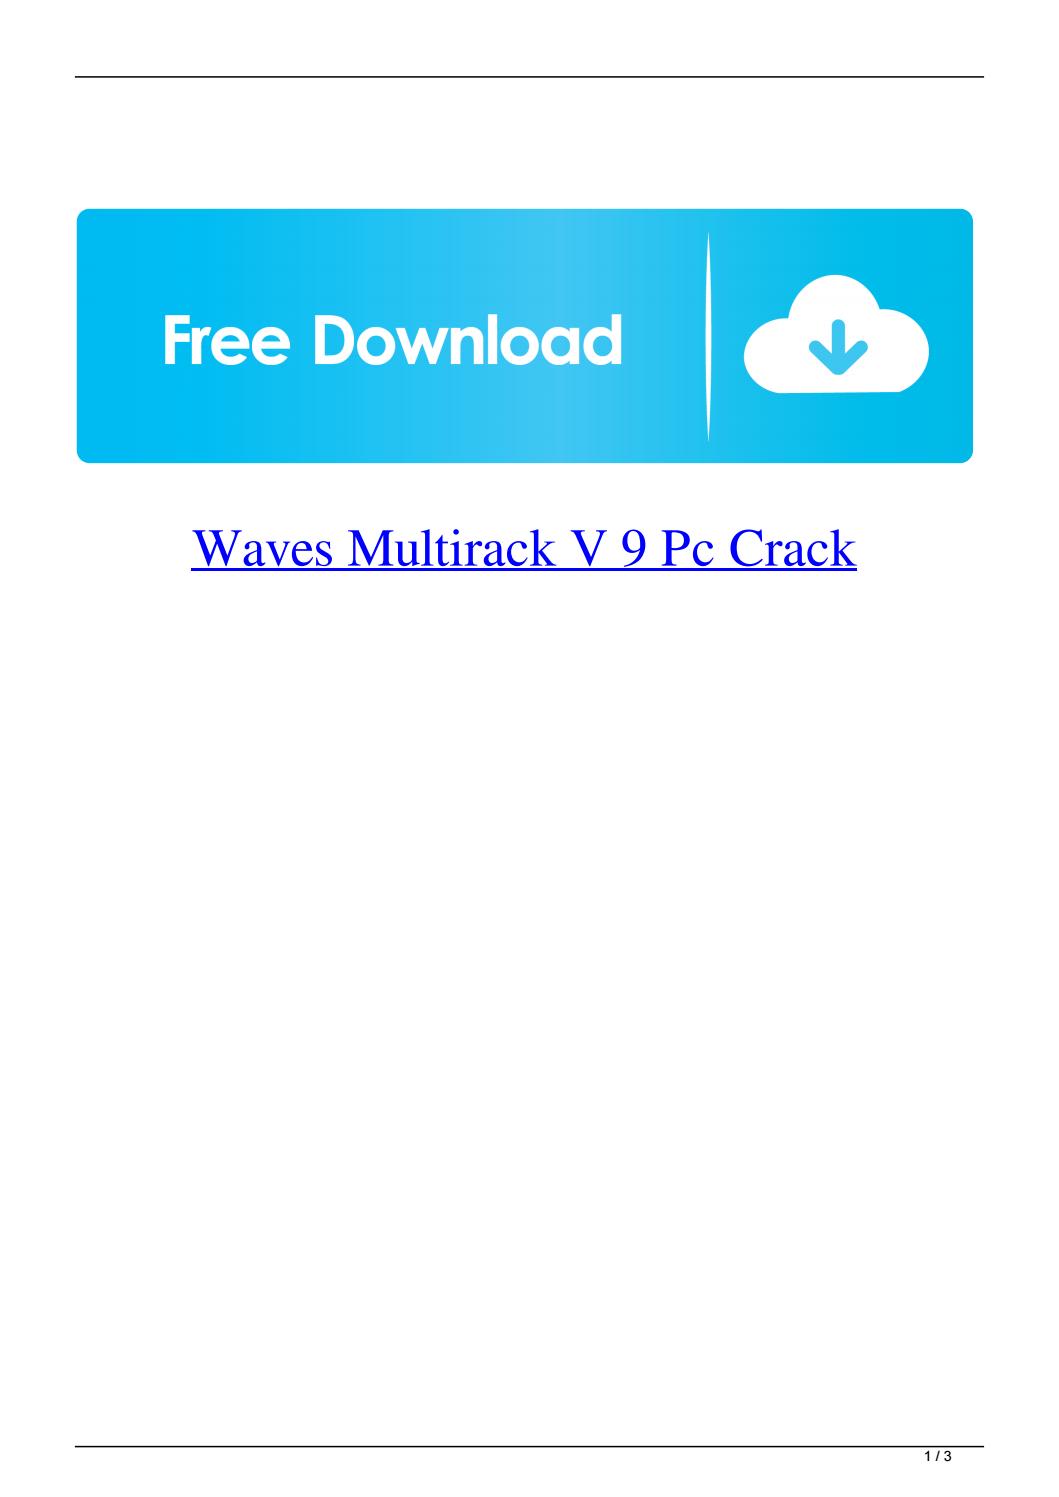 Multirack waves free download macos